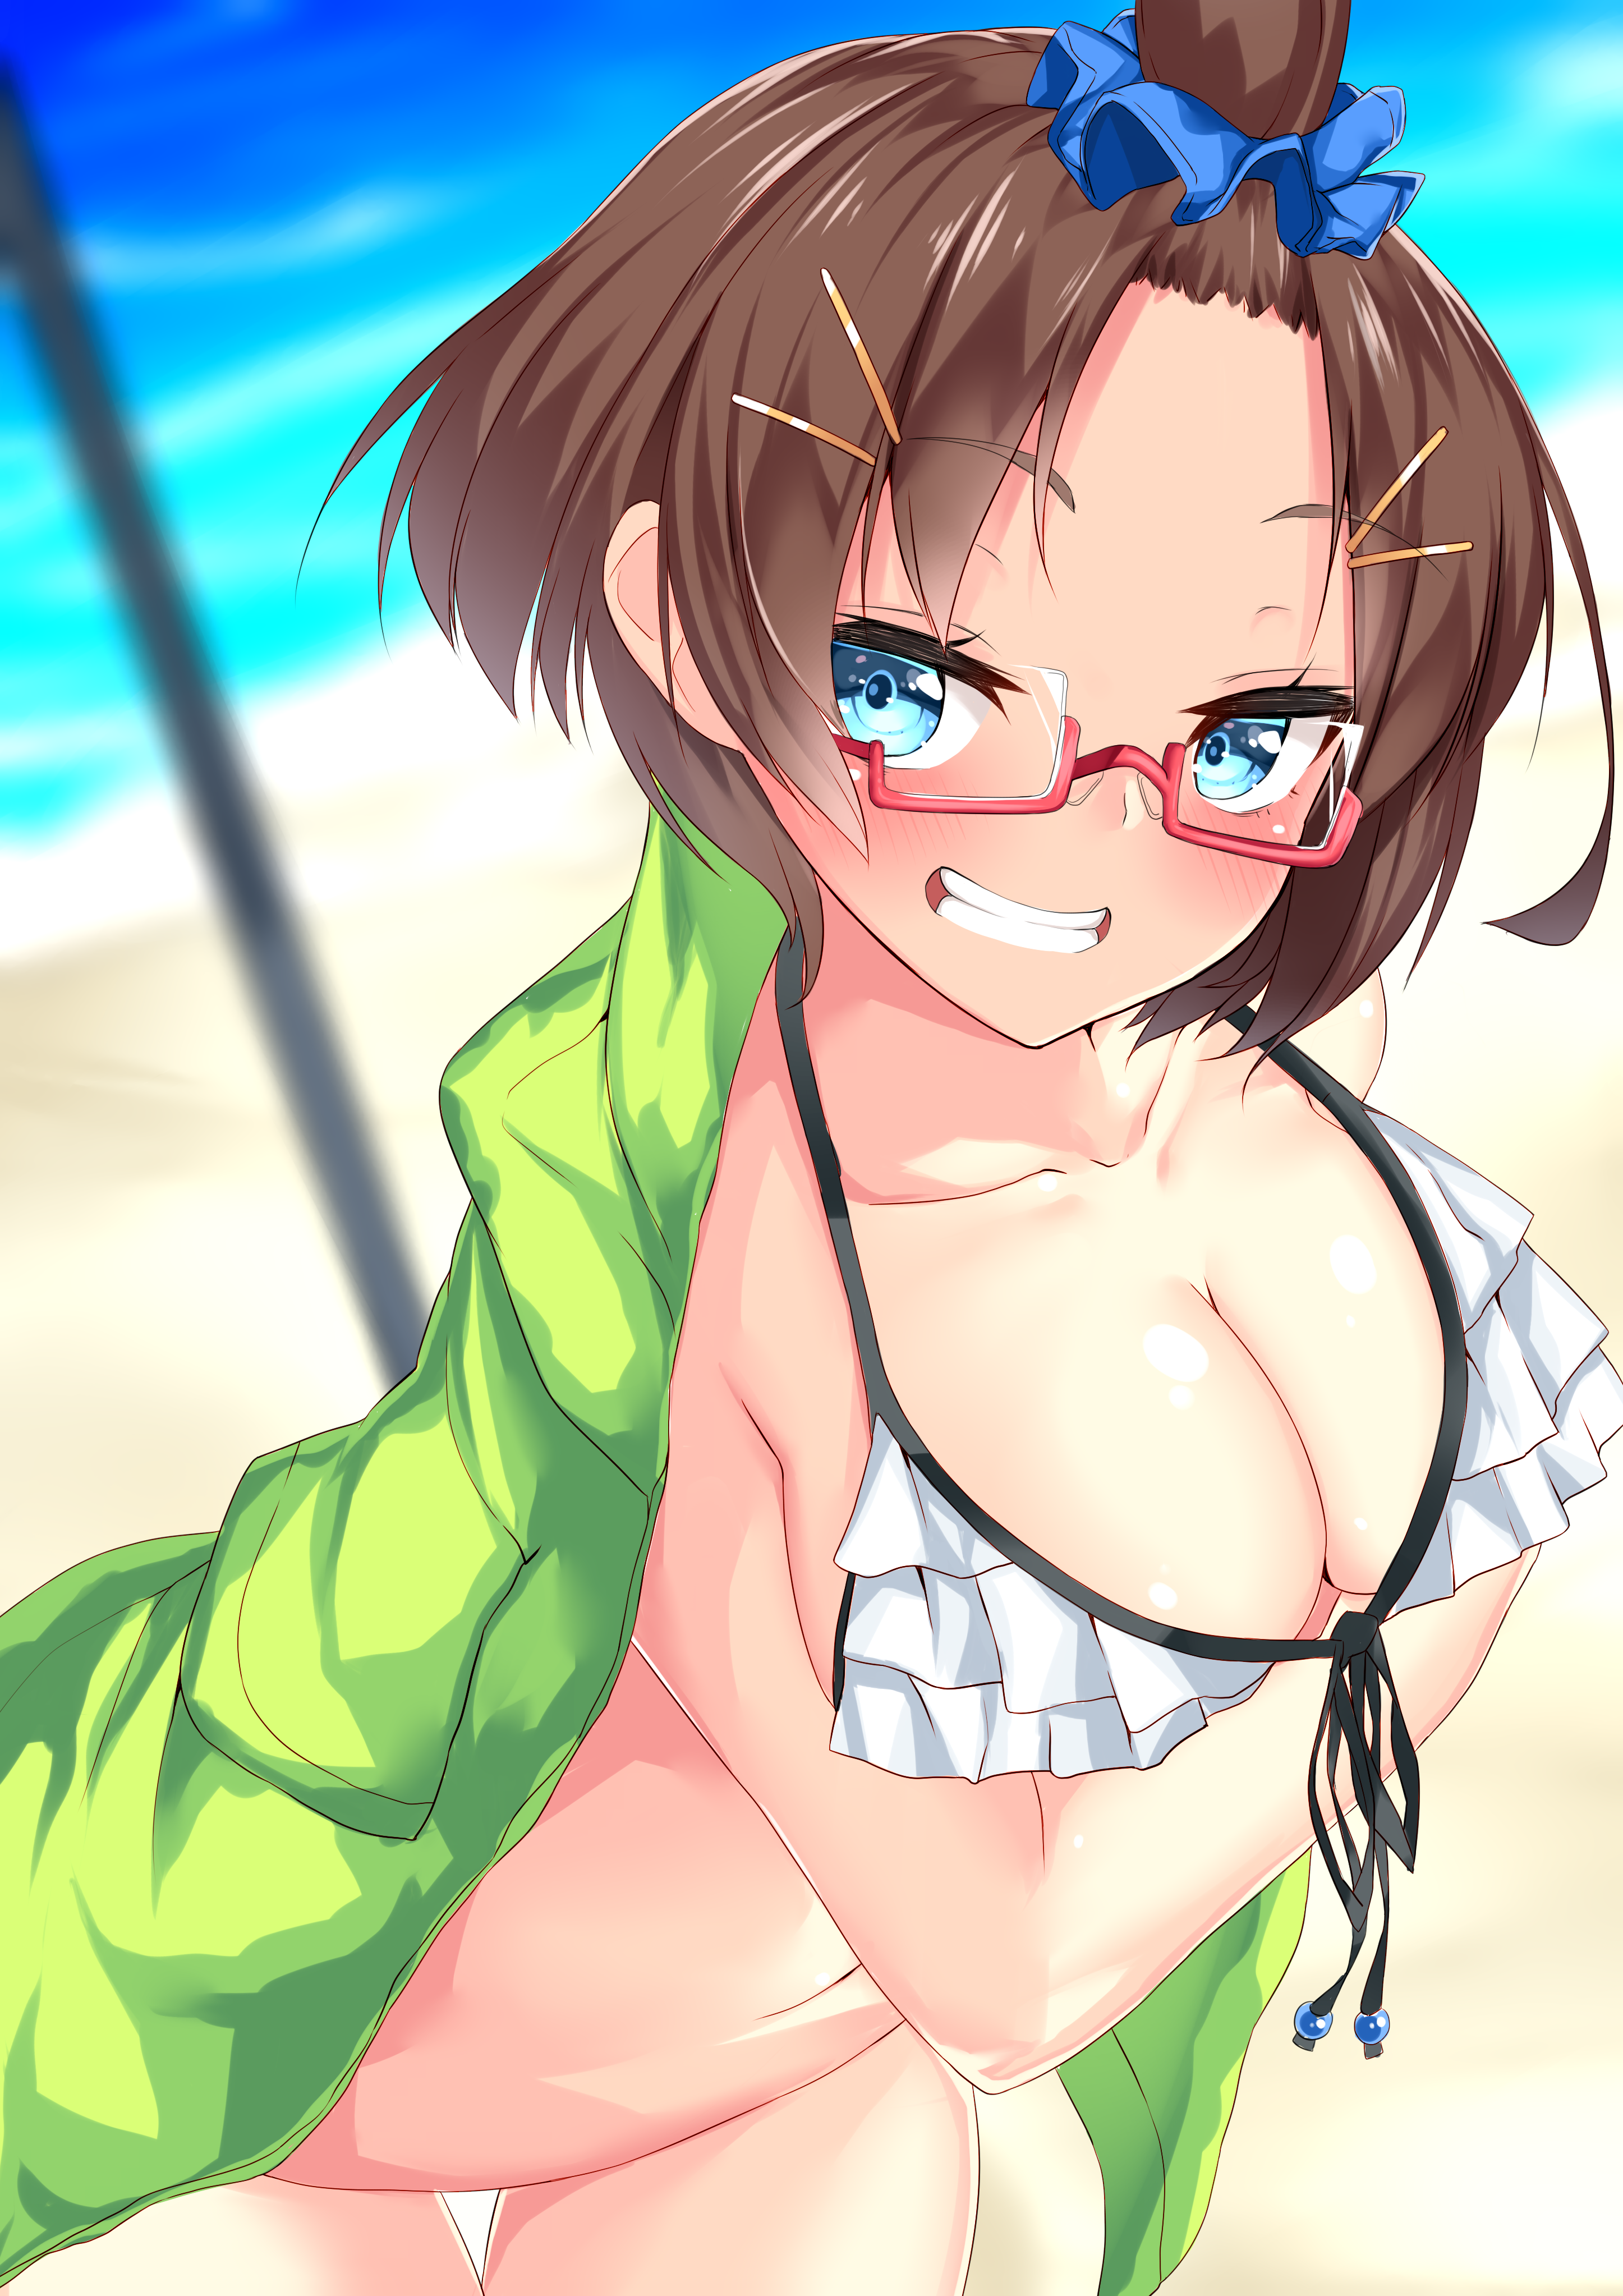 Anime 2893x4092 anime anime girls short hair brunette glasses blue eyes bikini beach cleavage smiling Nebusoku